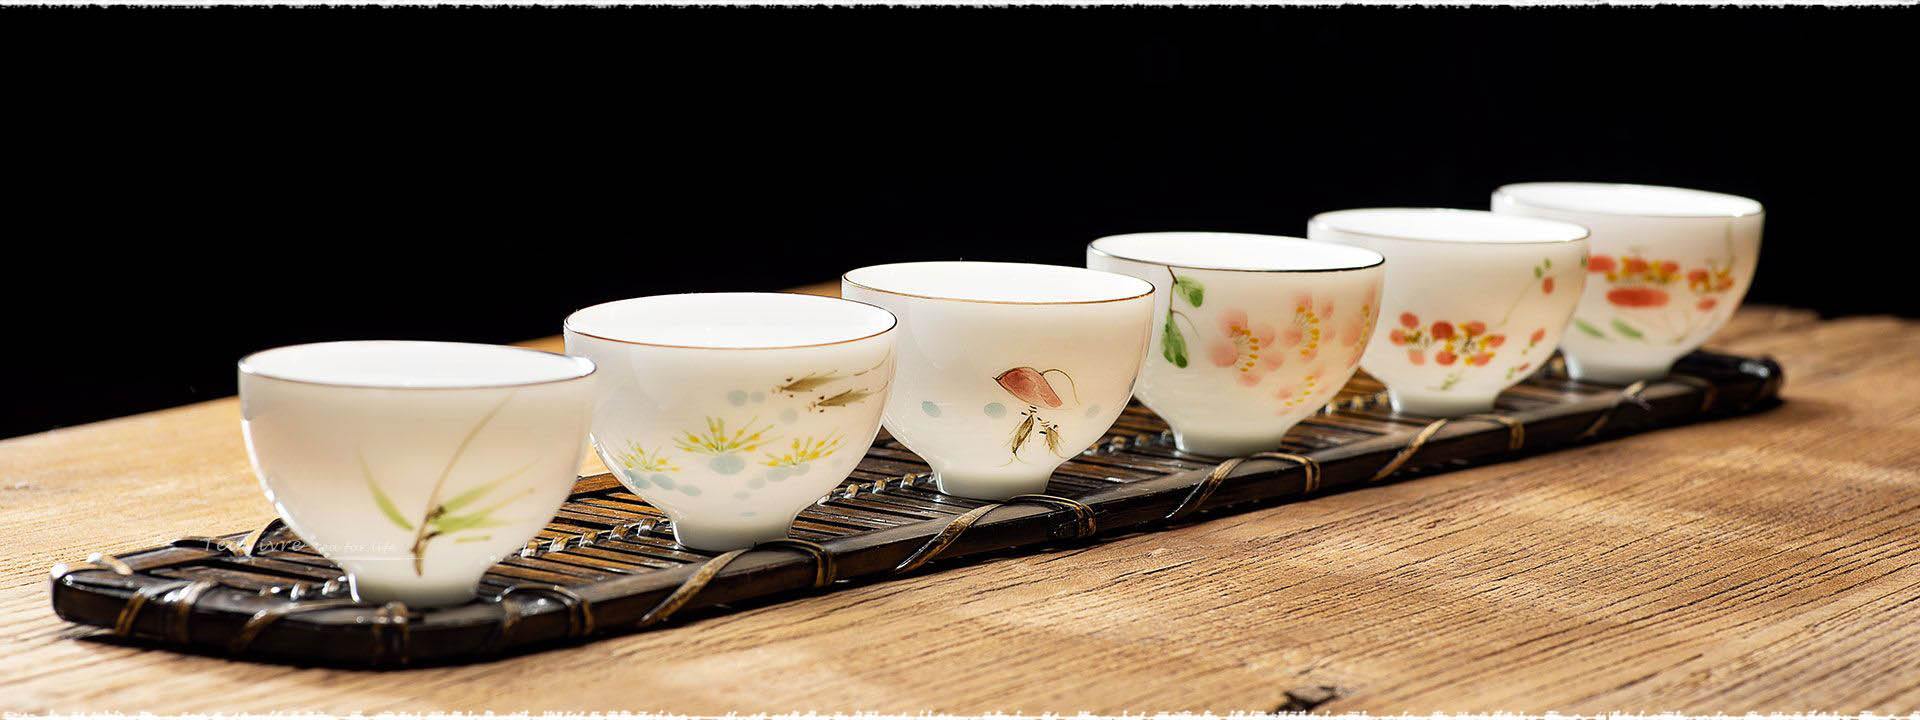 Porcelain Teapot – A Type of Ceramic Teapot